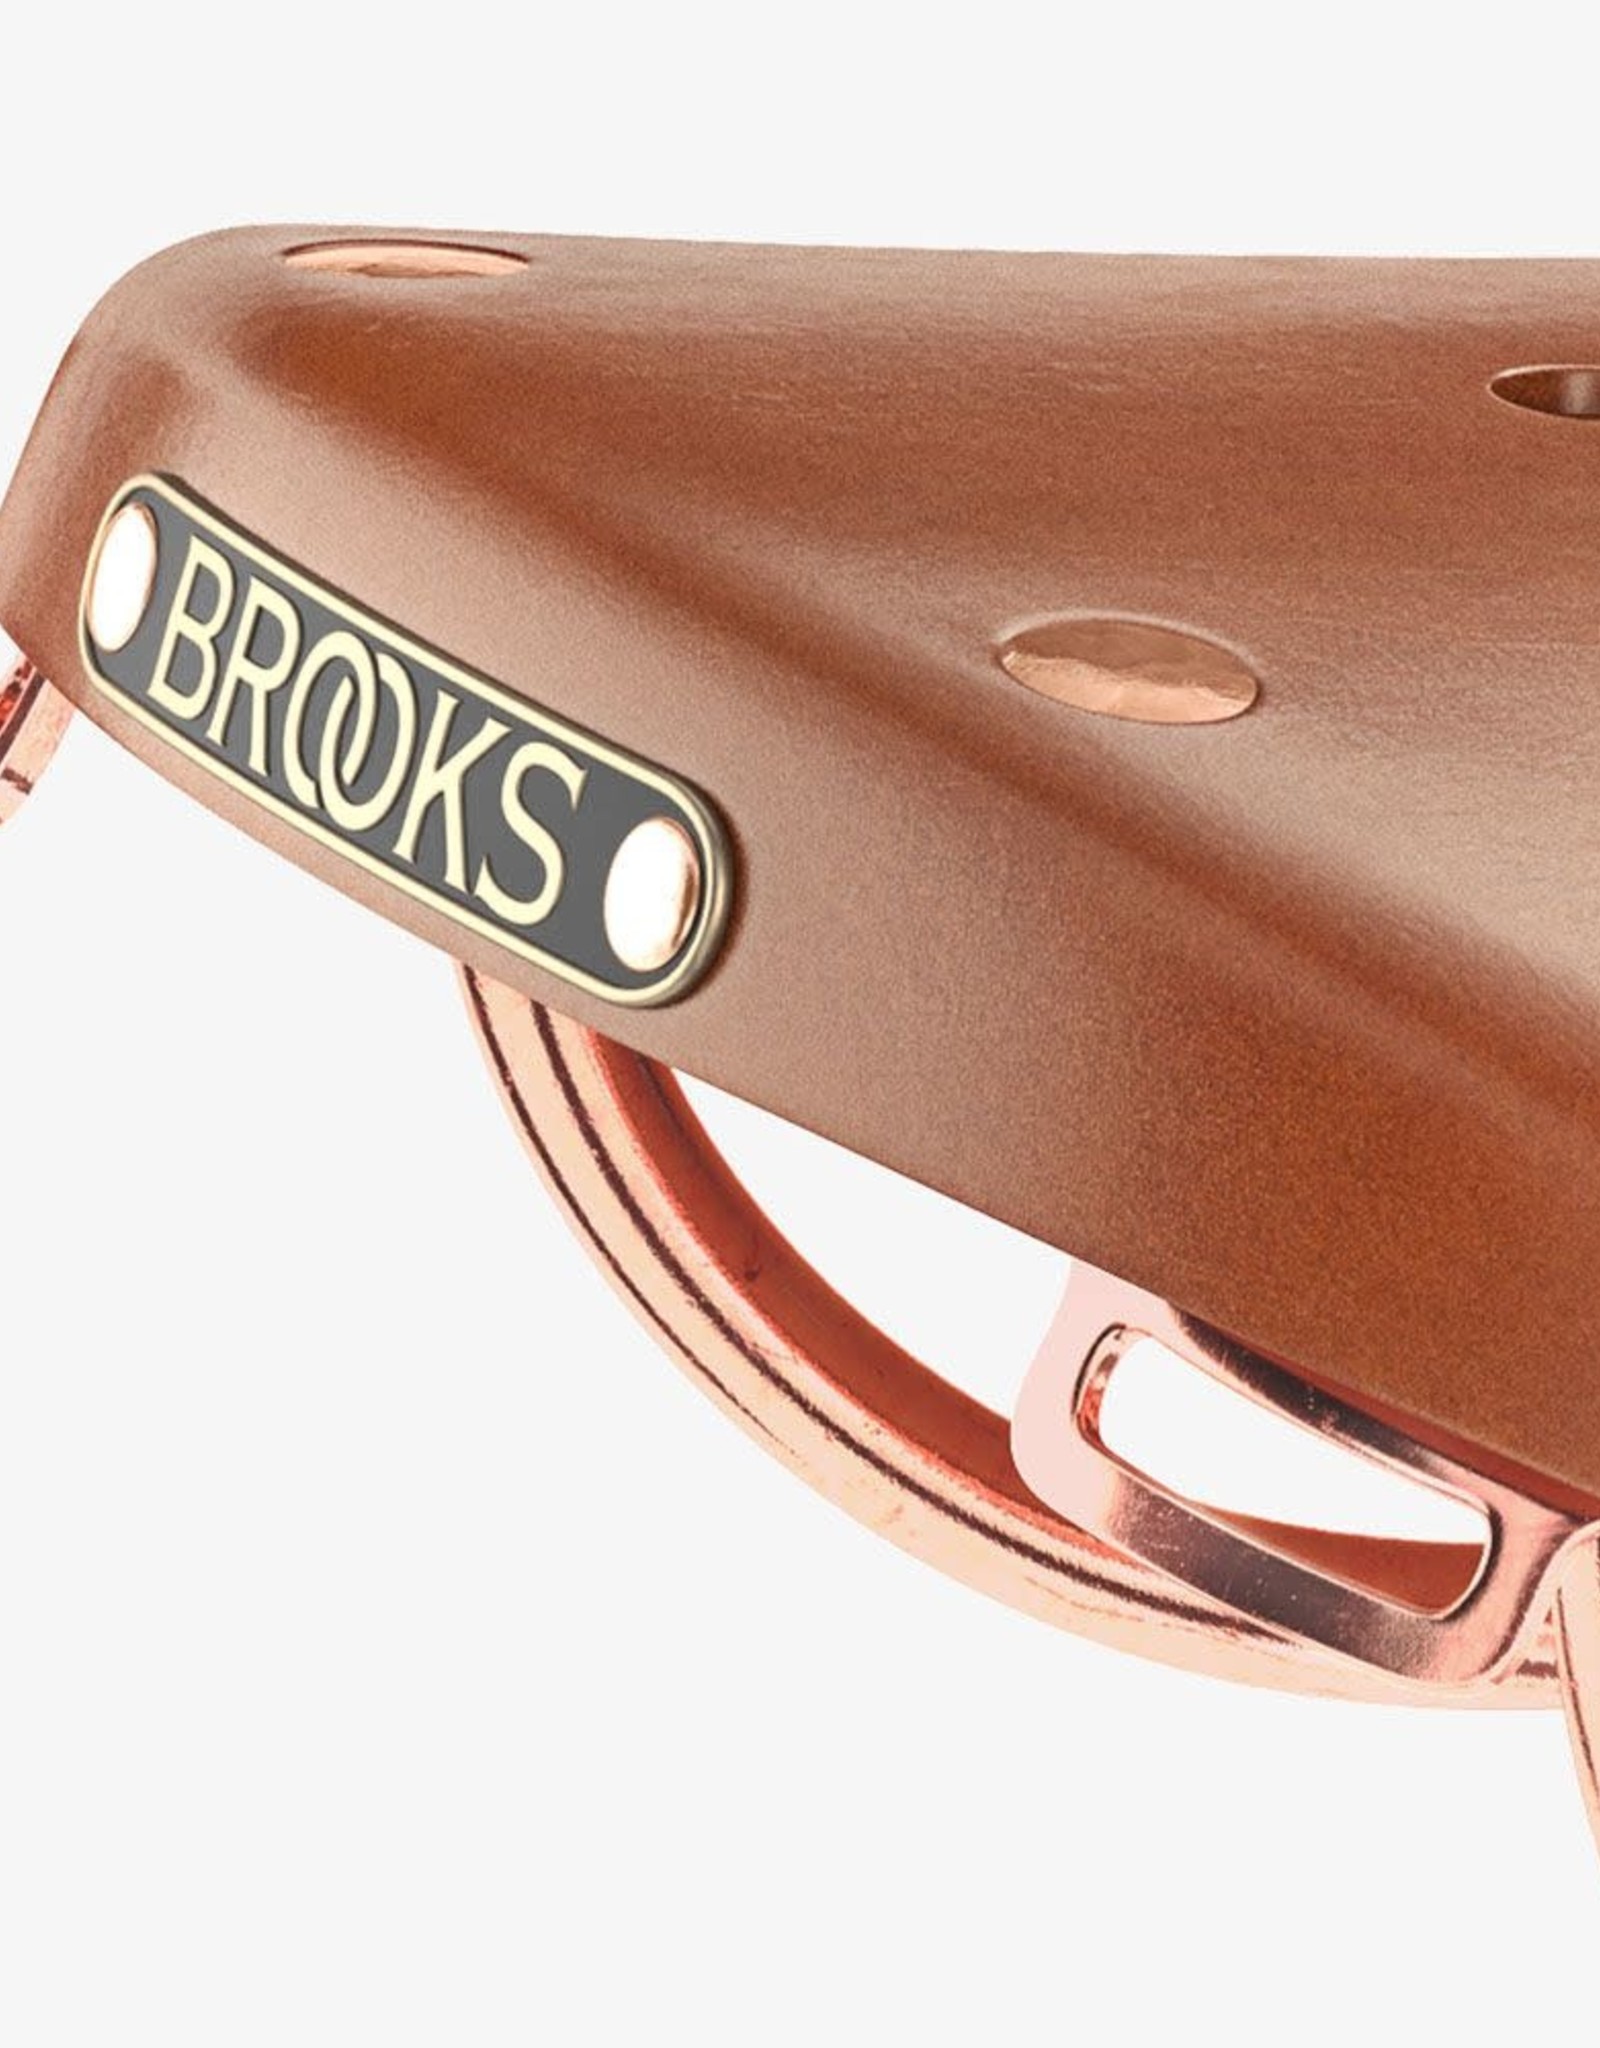 Brooks Brooks - B17 Special Short - Copper, Honey